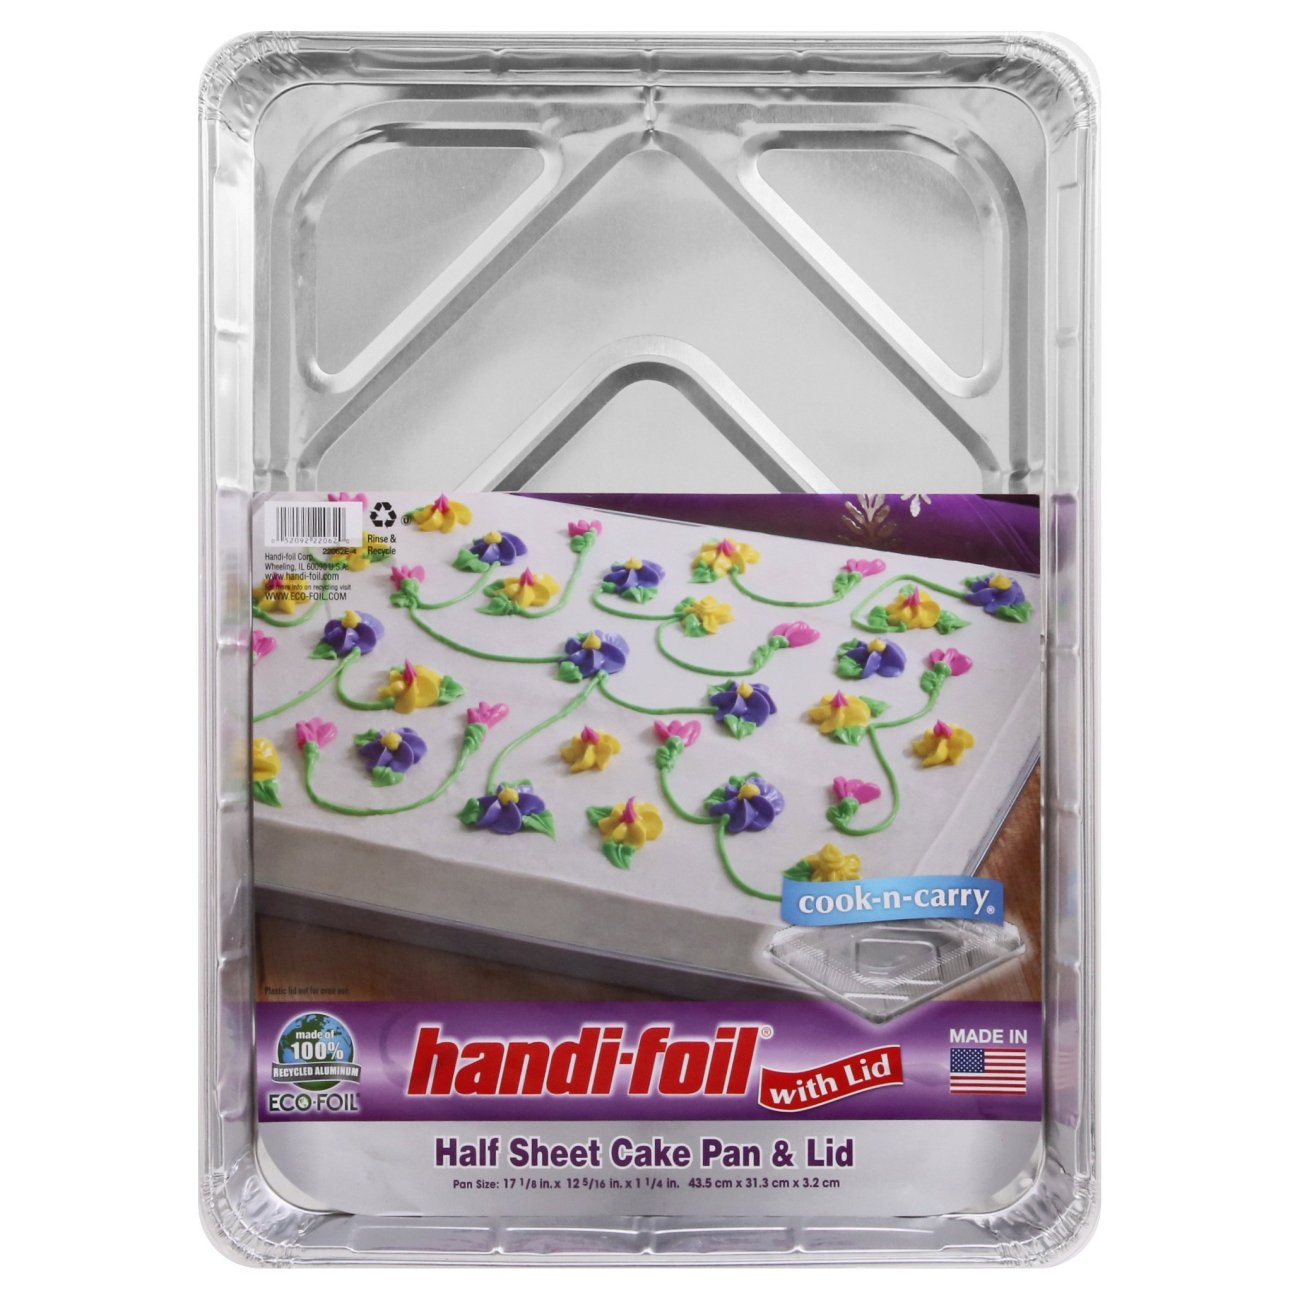 Handi-Foil Eco-Foil Cook-N-Carry Half Sheet Pan & Lid - Shop